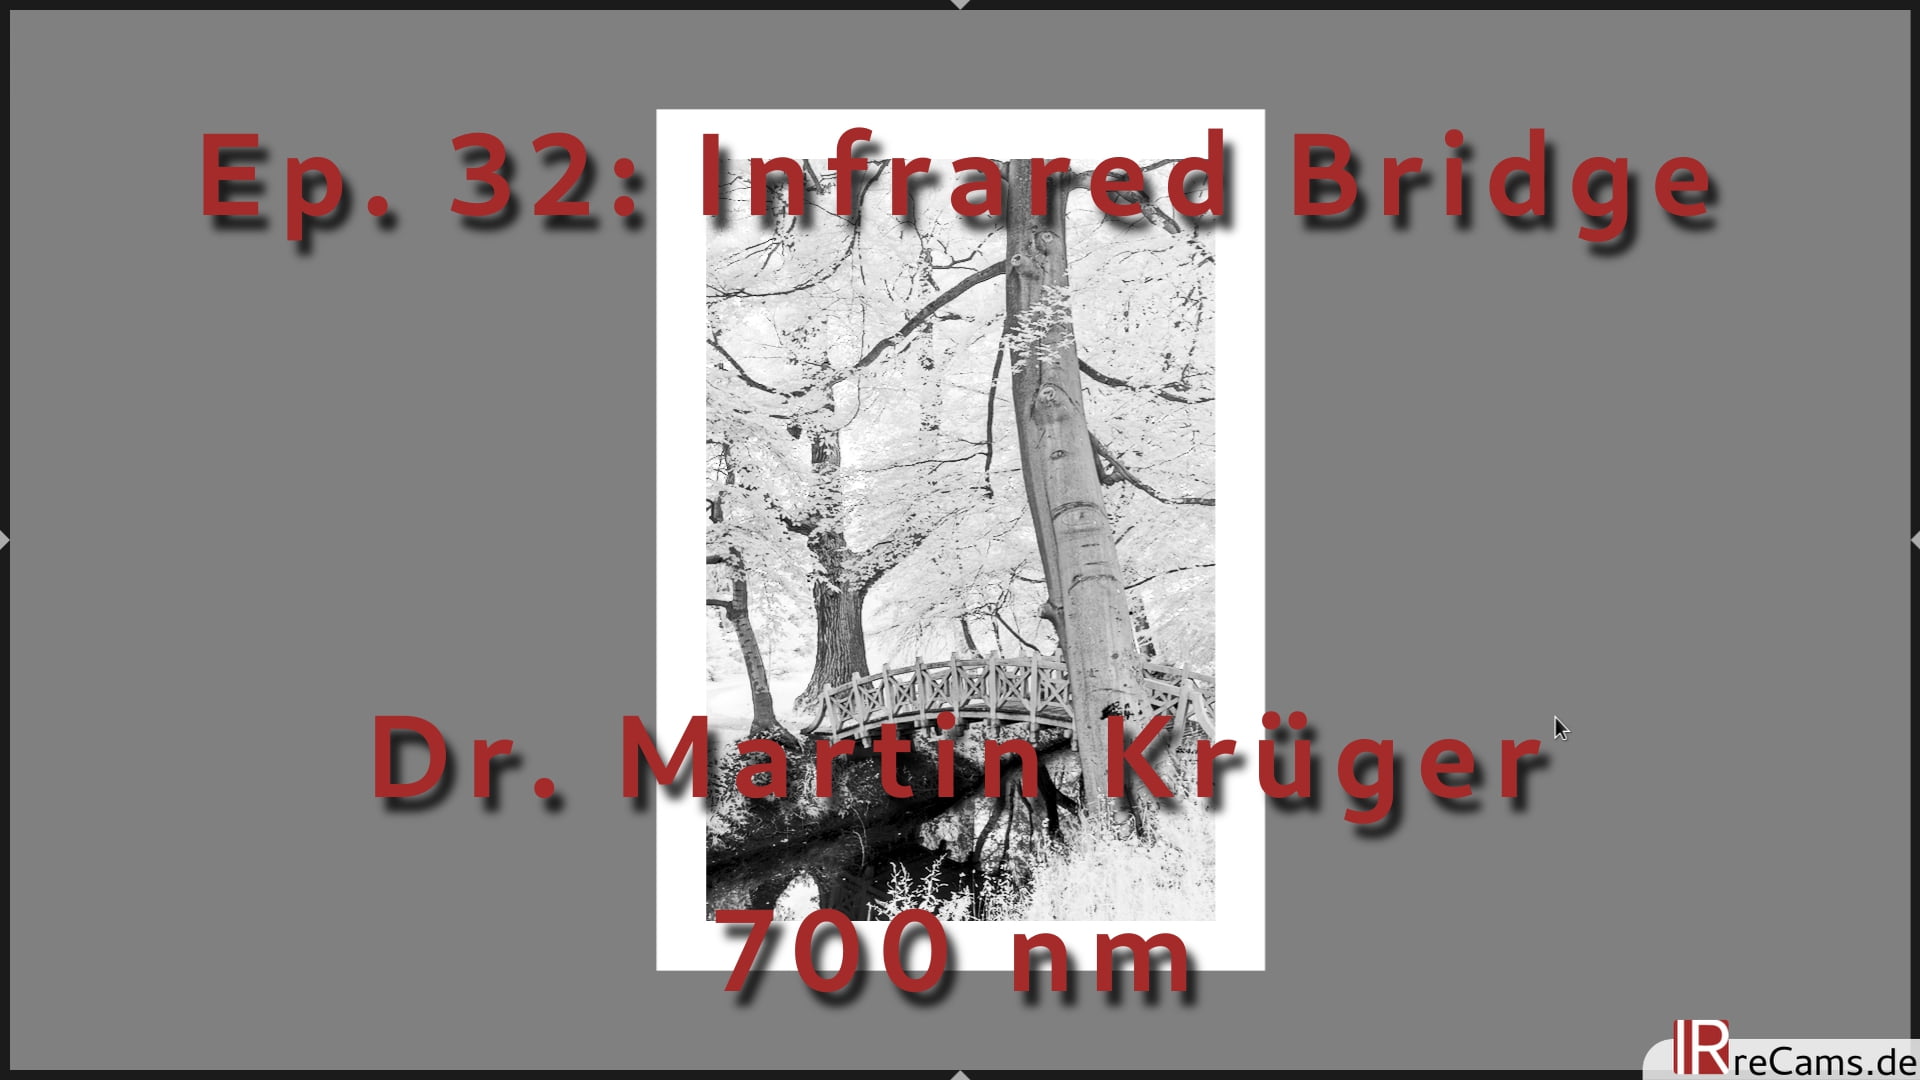 Ep. 32: Edit Infrared Bridge as Black and White Image - 700 nm